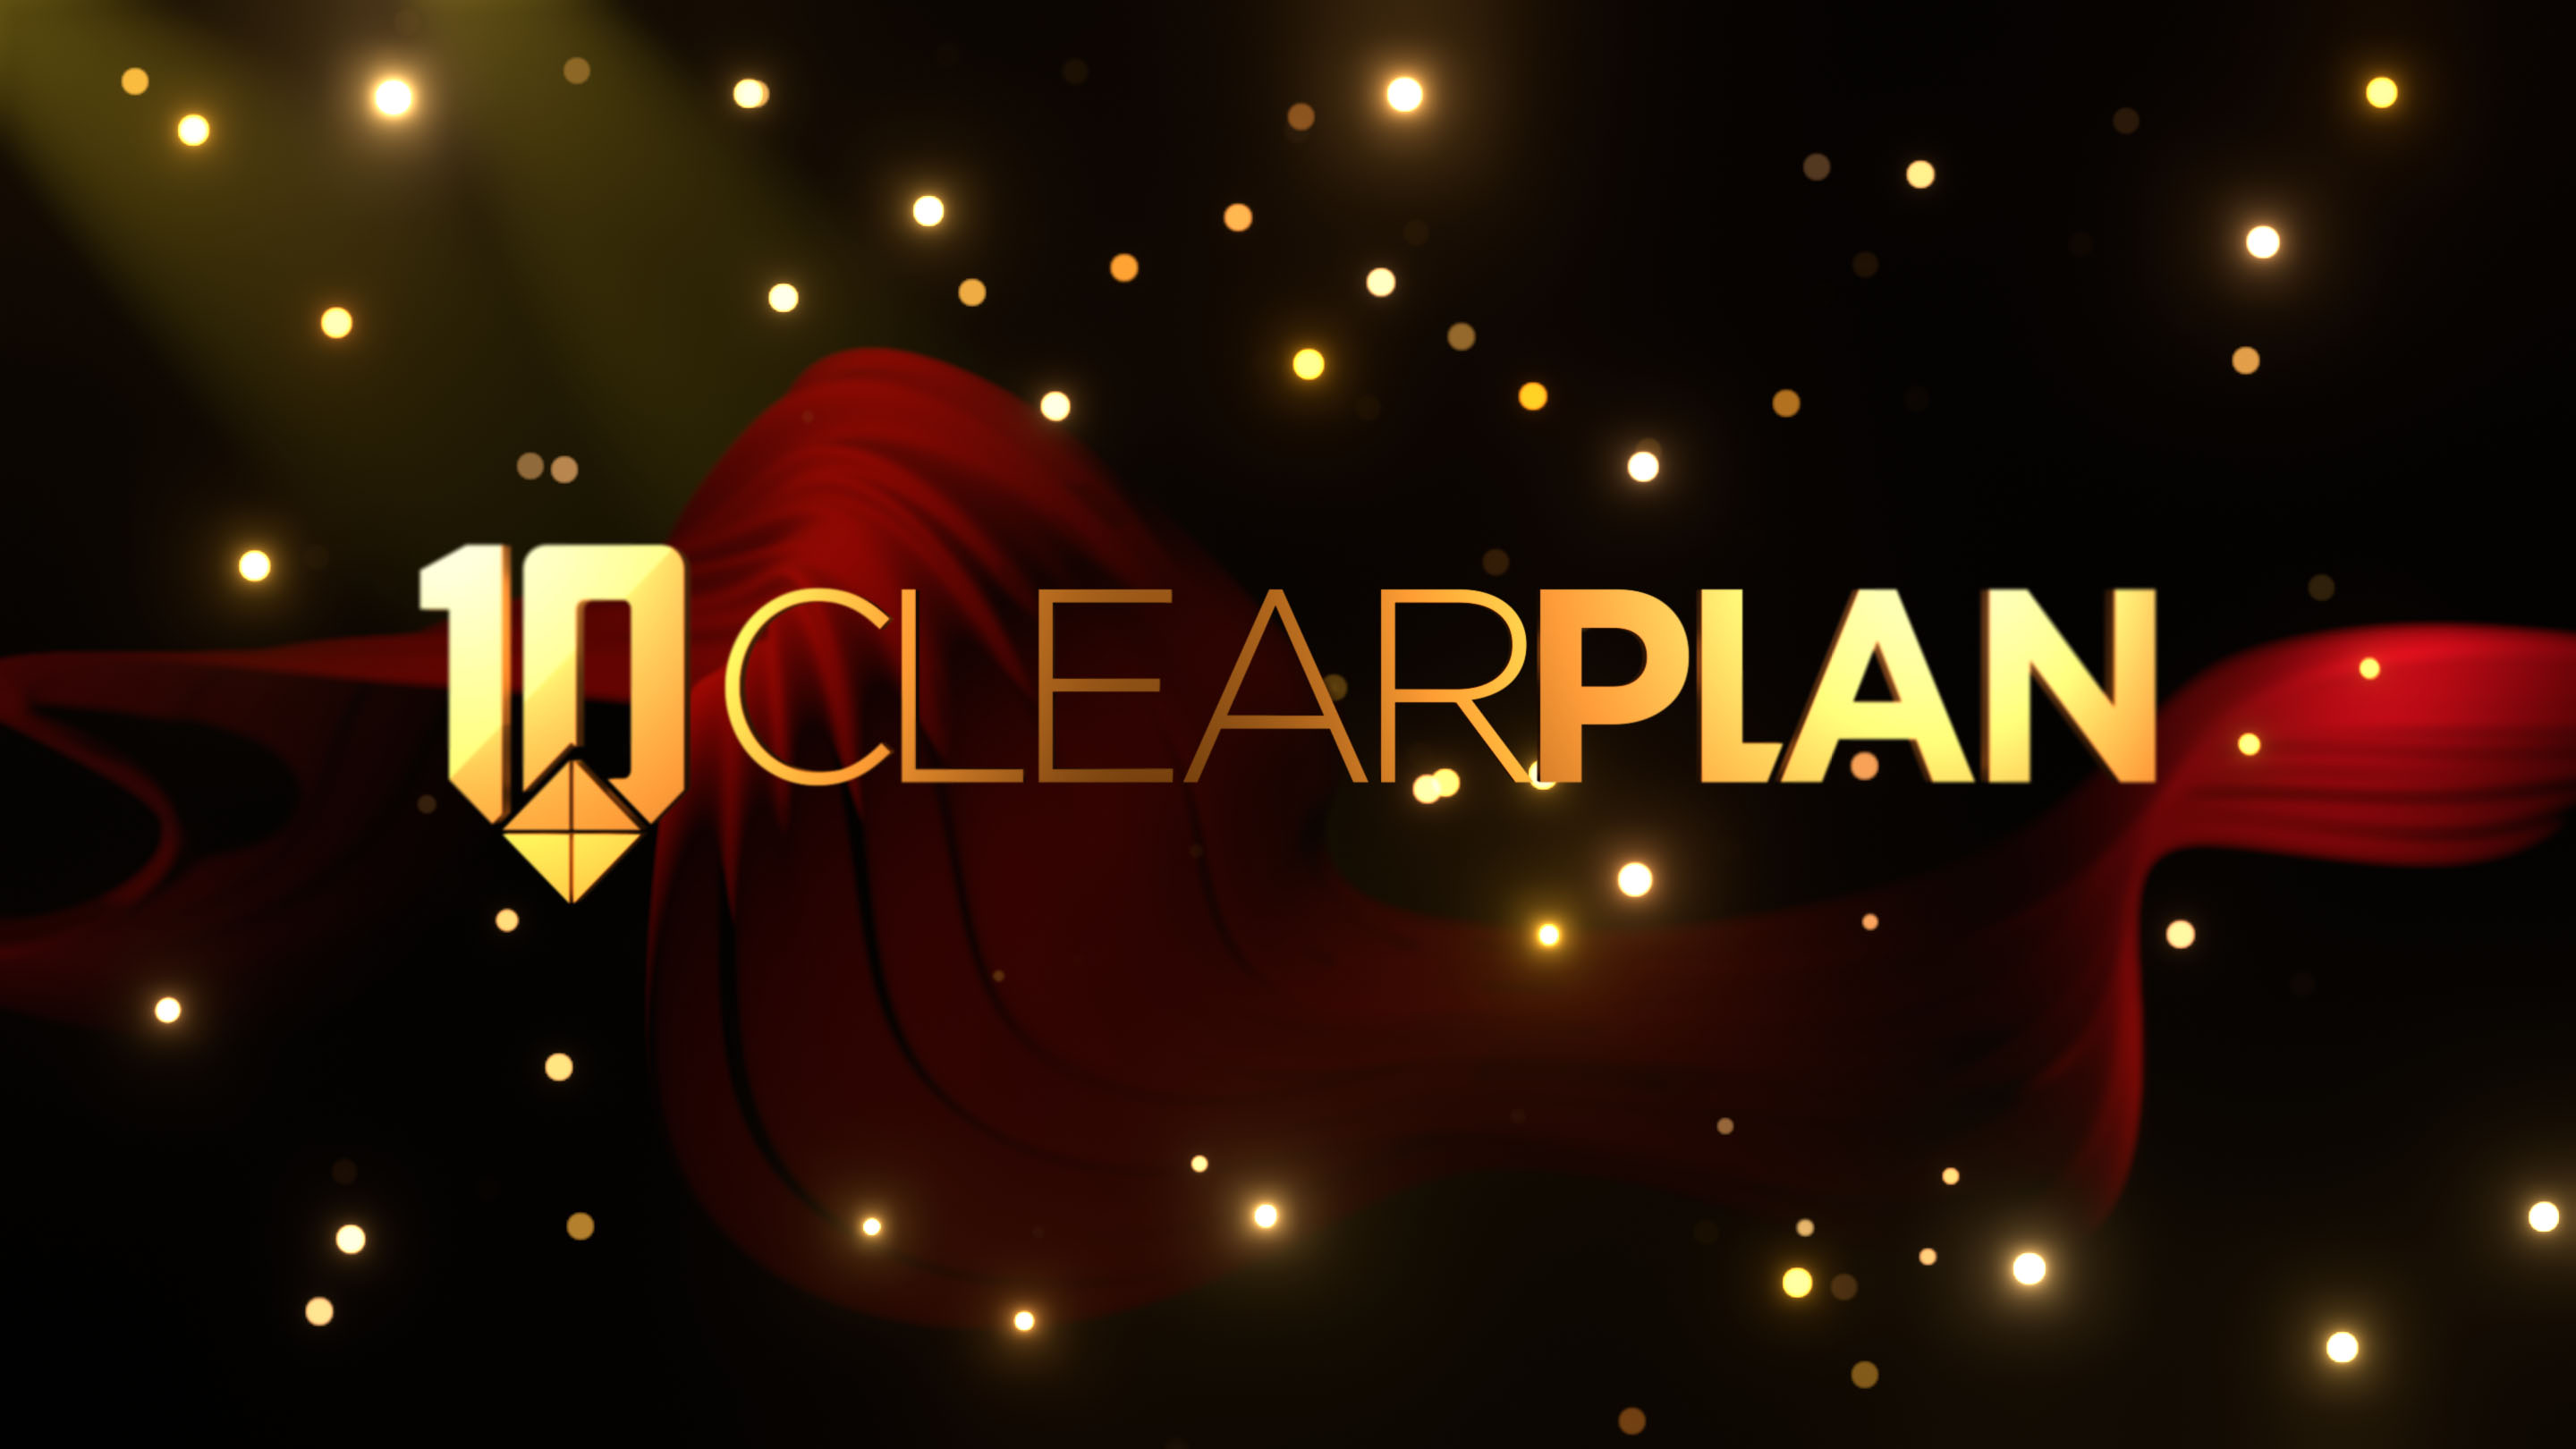 ClearPlan 10 year banner